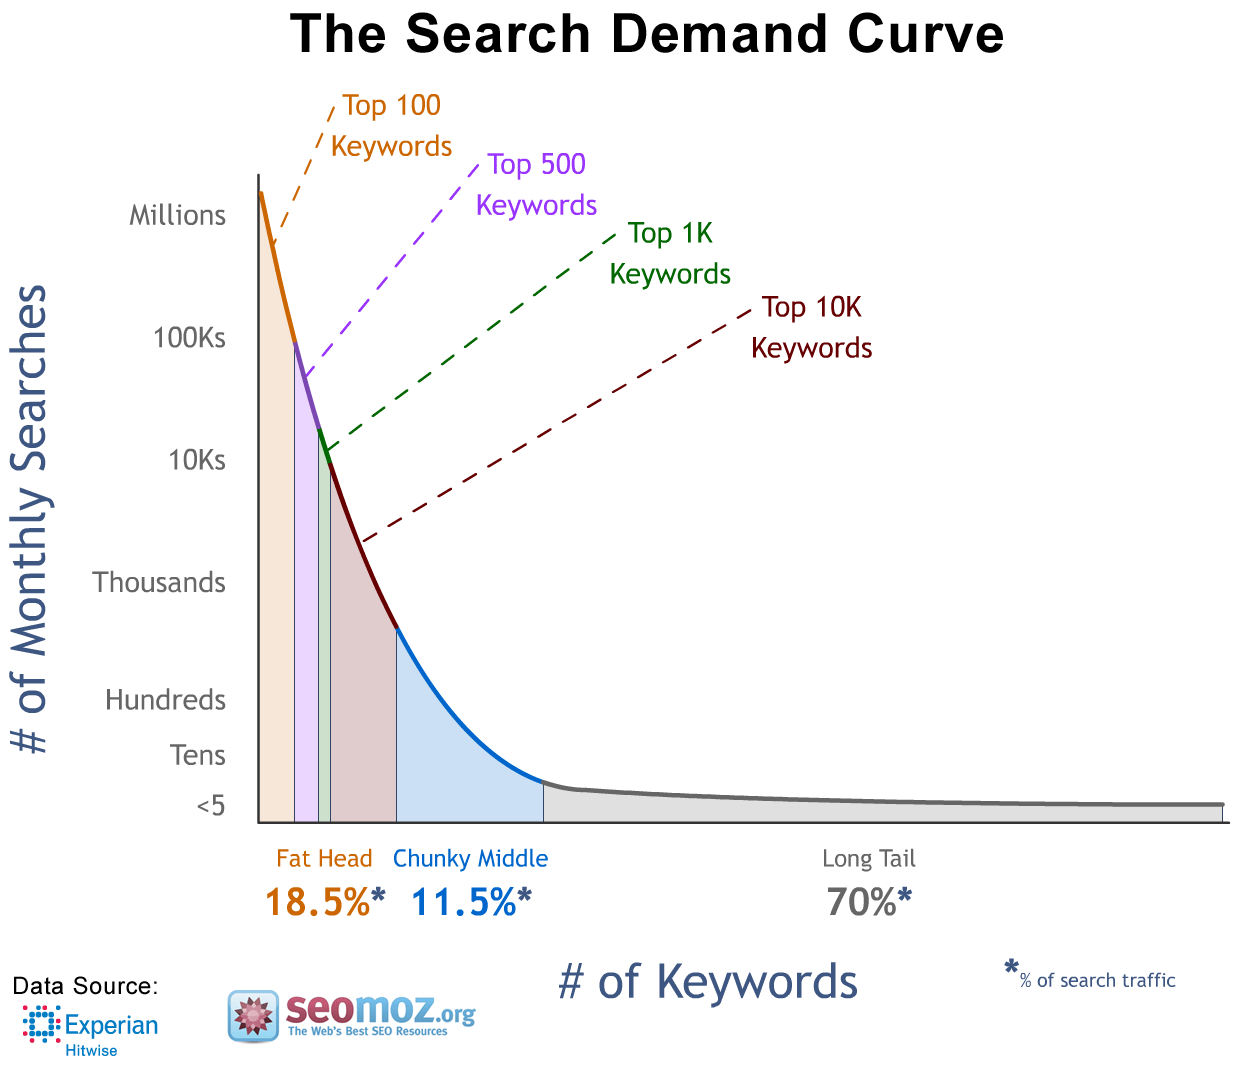 search demand curve longtail keywords